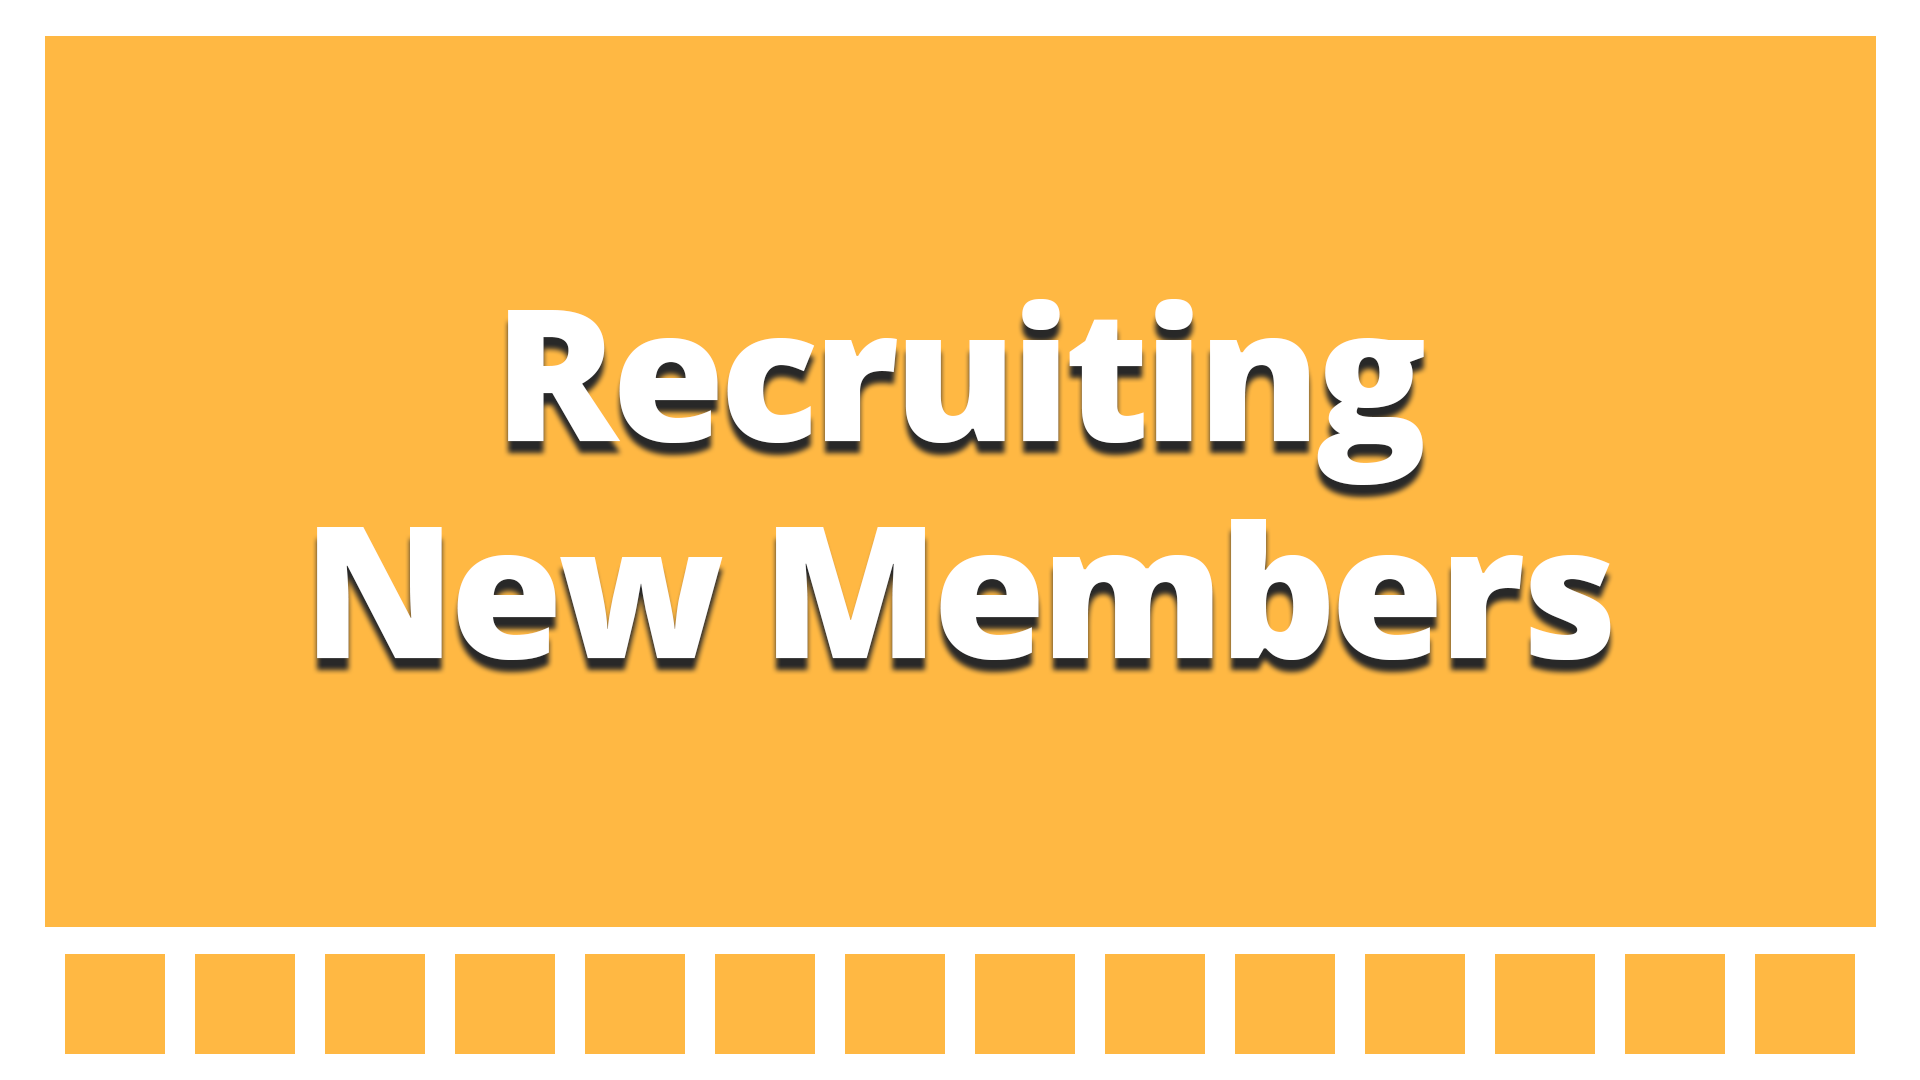 Recruiting new members